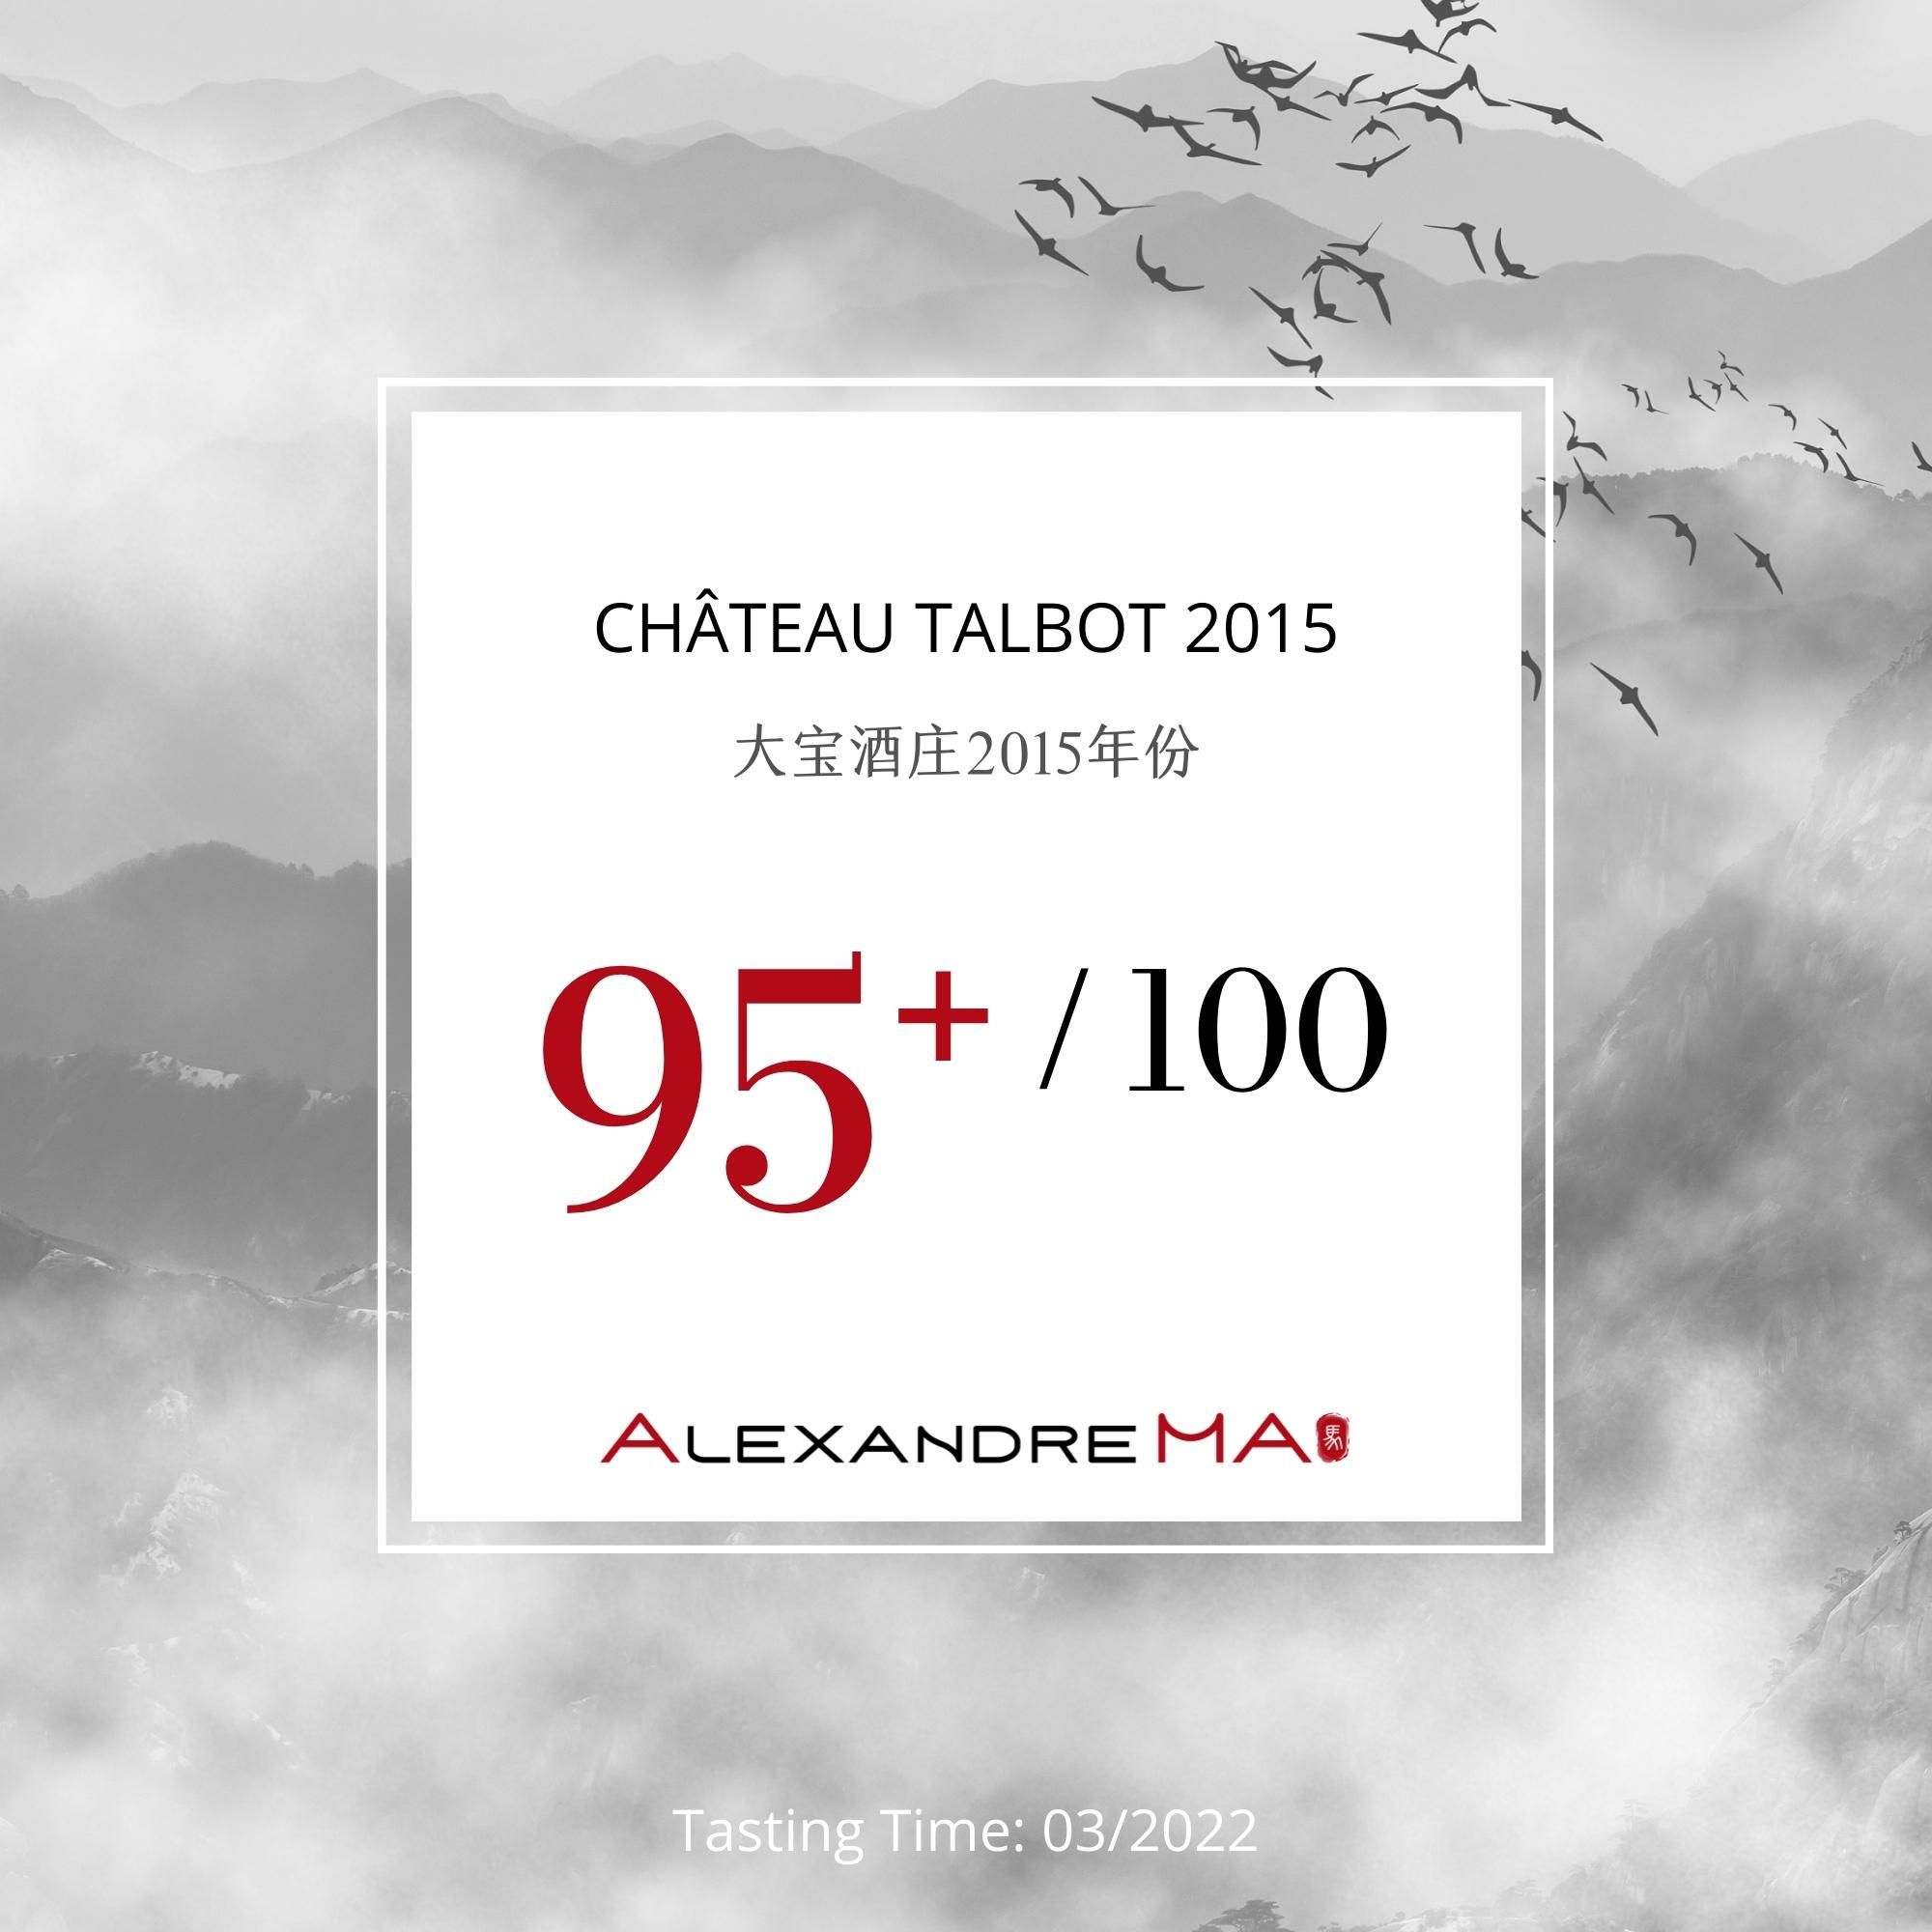 Château Talbot 2015 - Alexandre MA